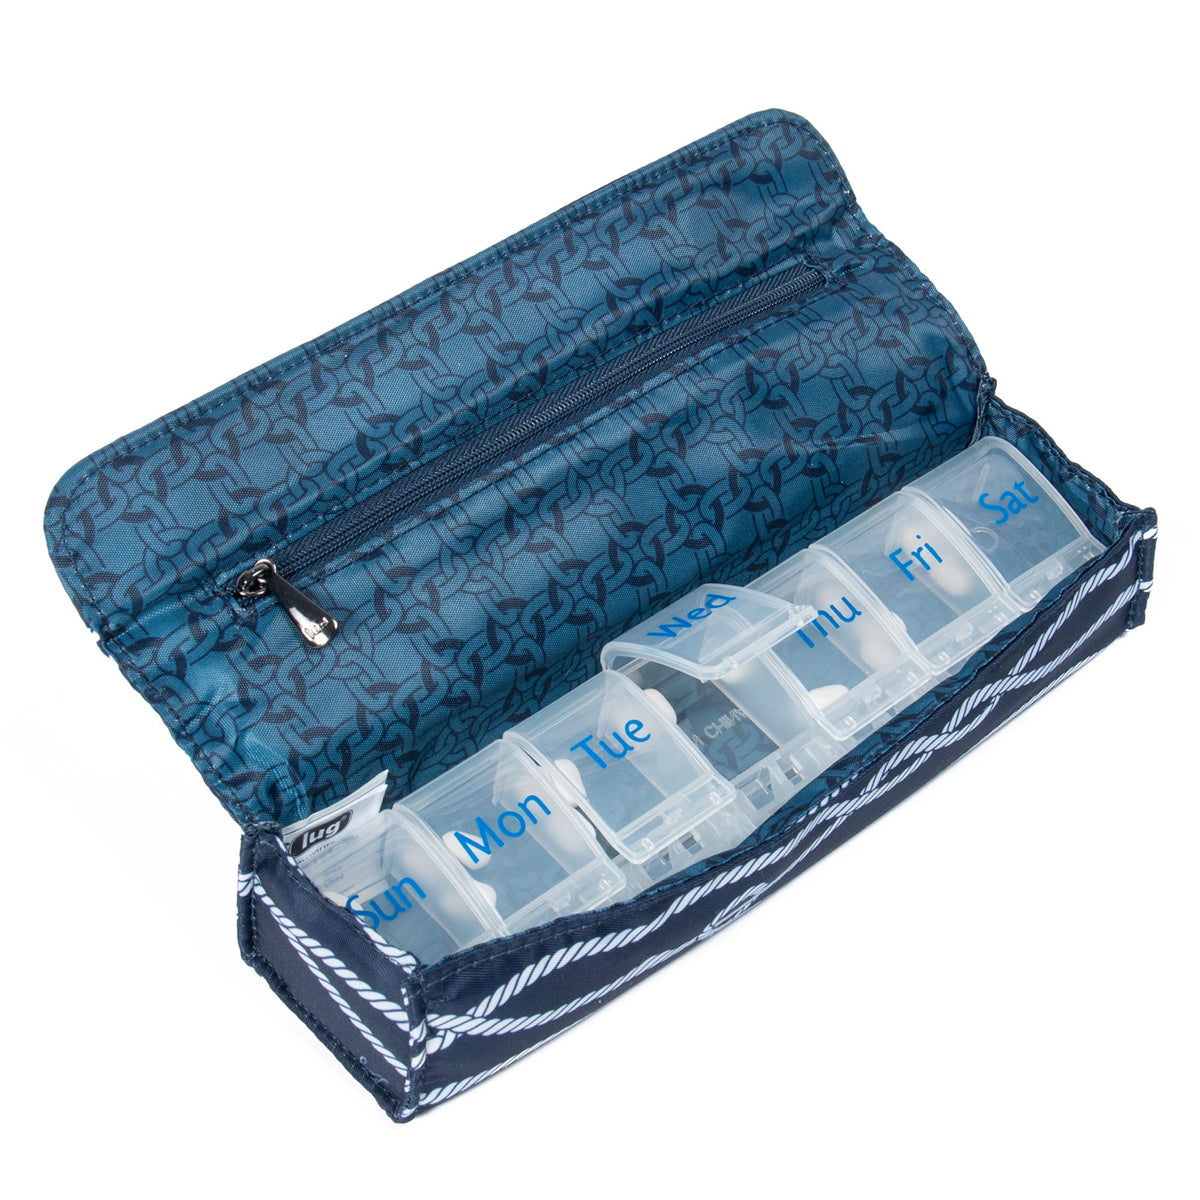 Magnetic Pill Organizer,Travel Travel Pill Box Supplement Organizers Daily Pill Holder Container Compact for Pocket, Size: Travel Pill Organizer Pill